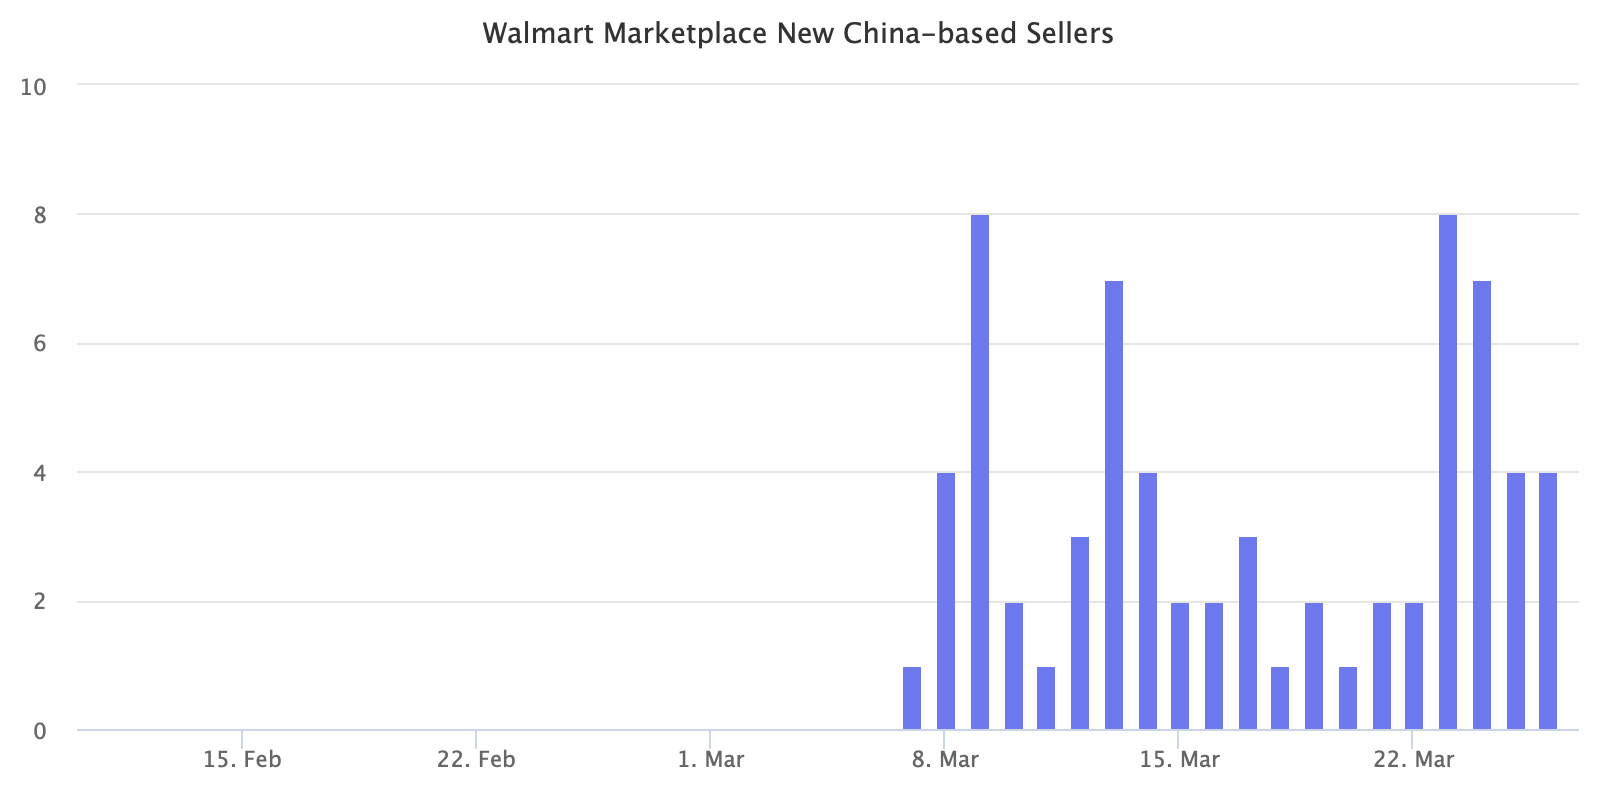 Walmart Marketplace New China-based Sellers